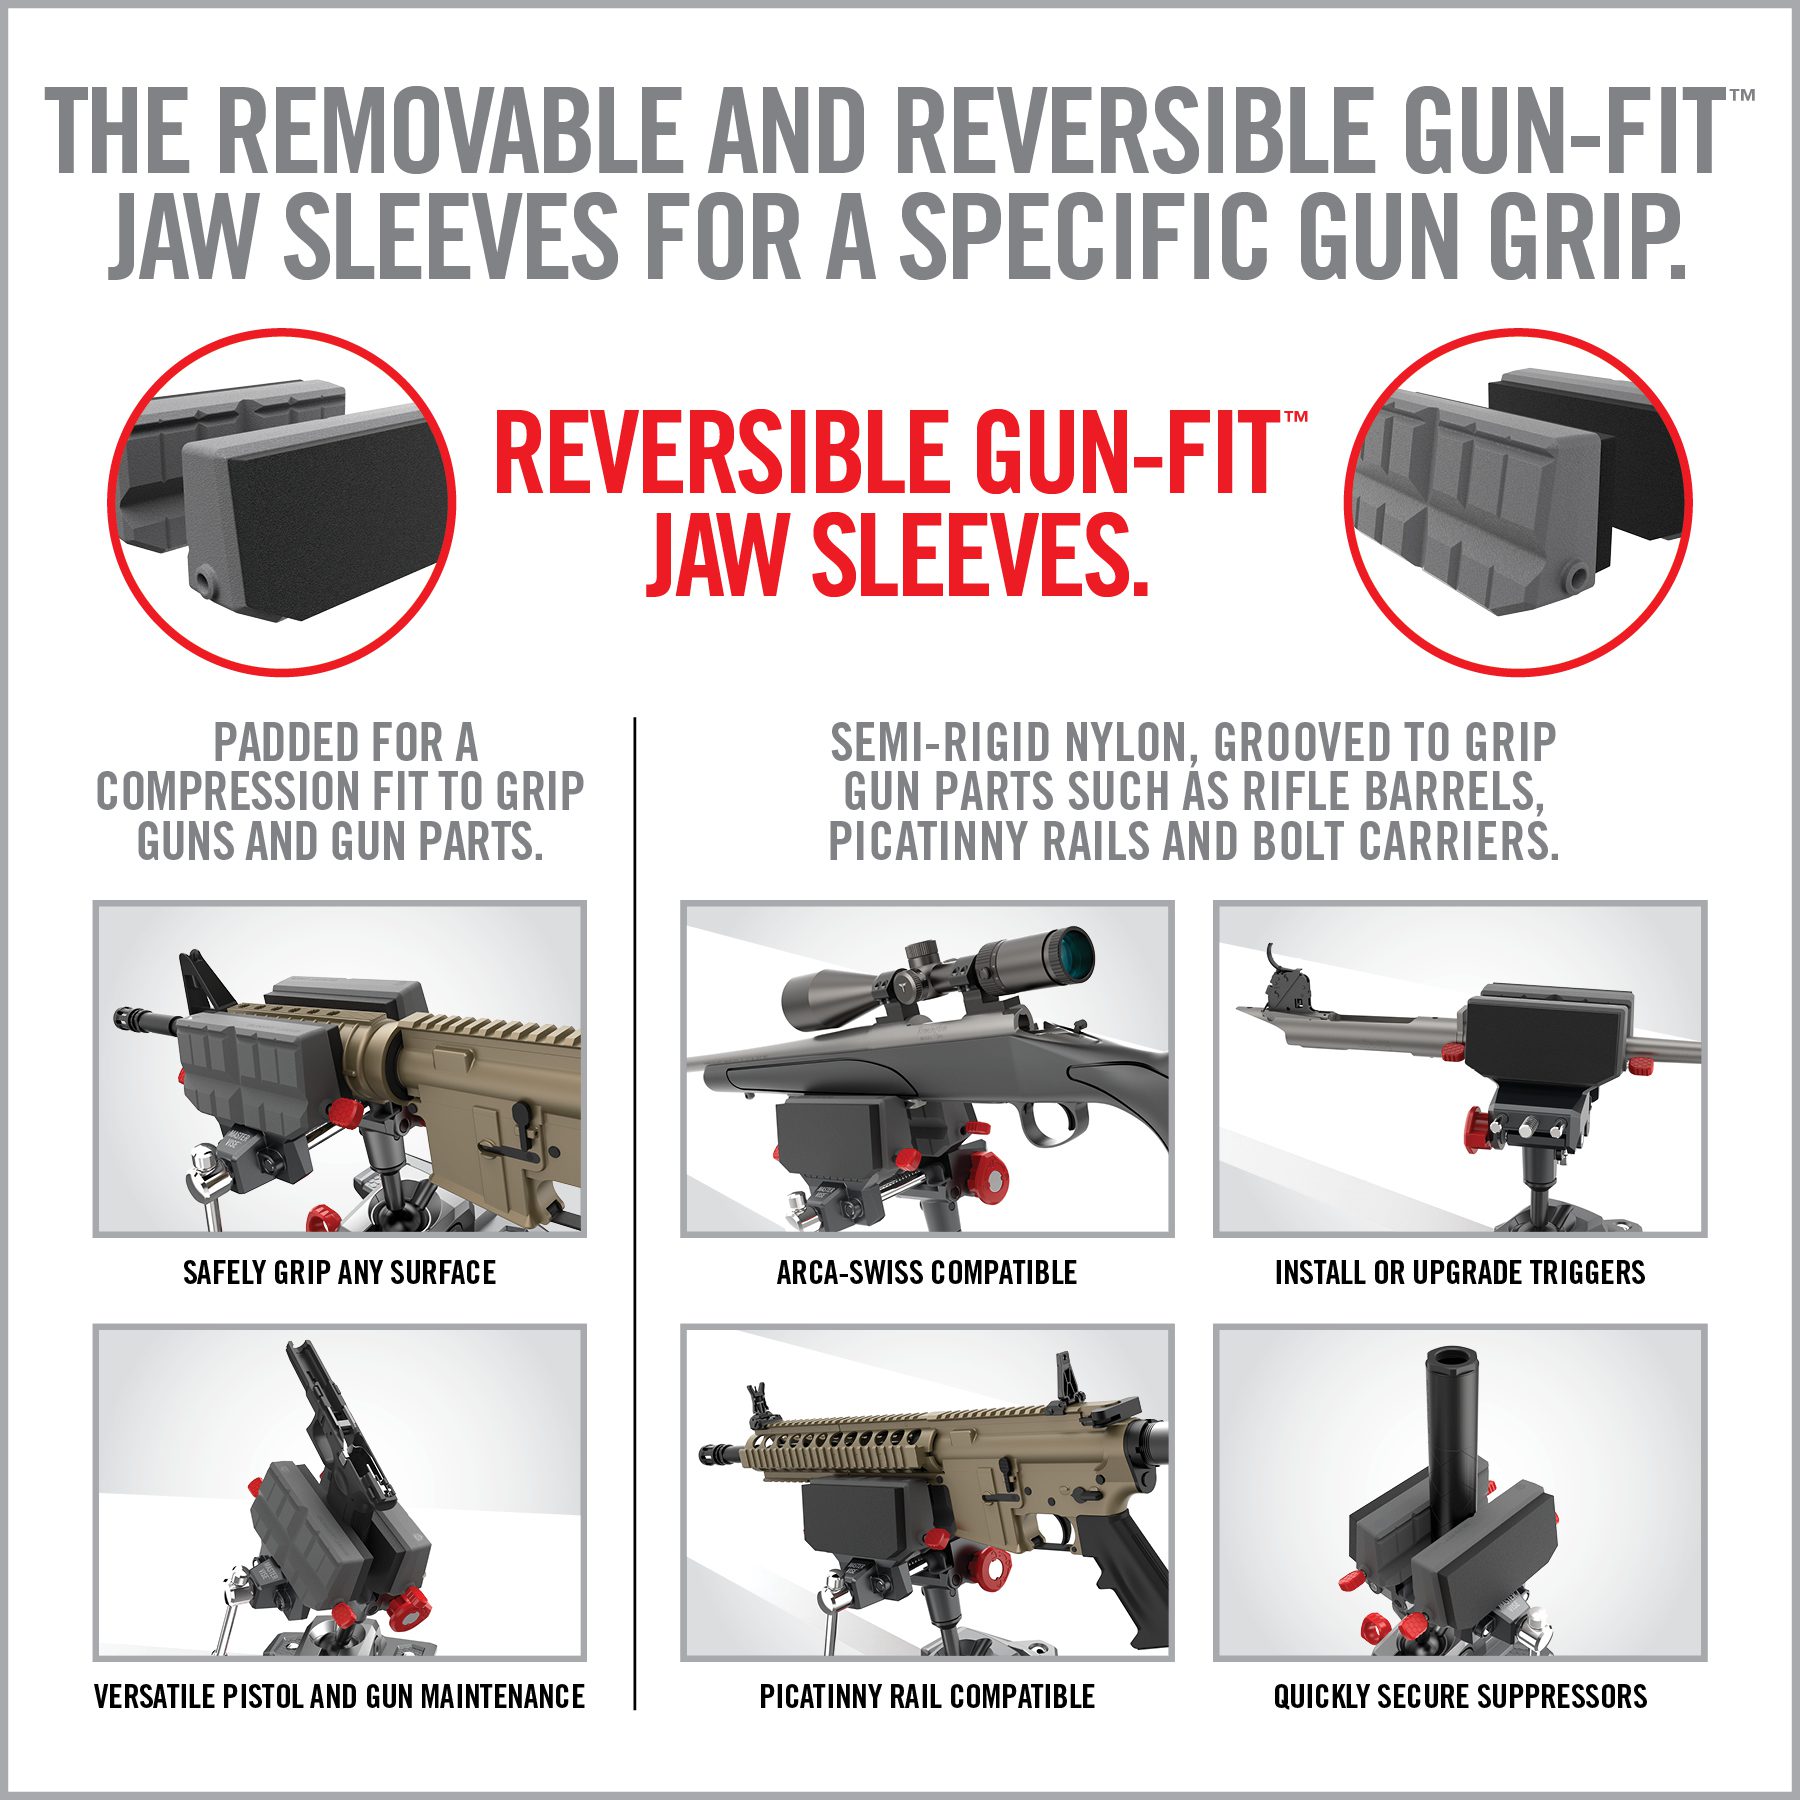 an advertisement for the new gun grip system